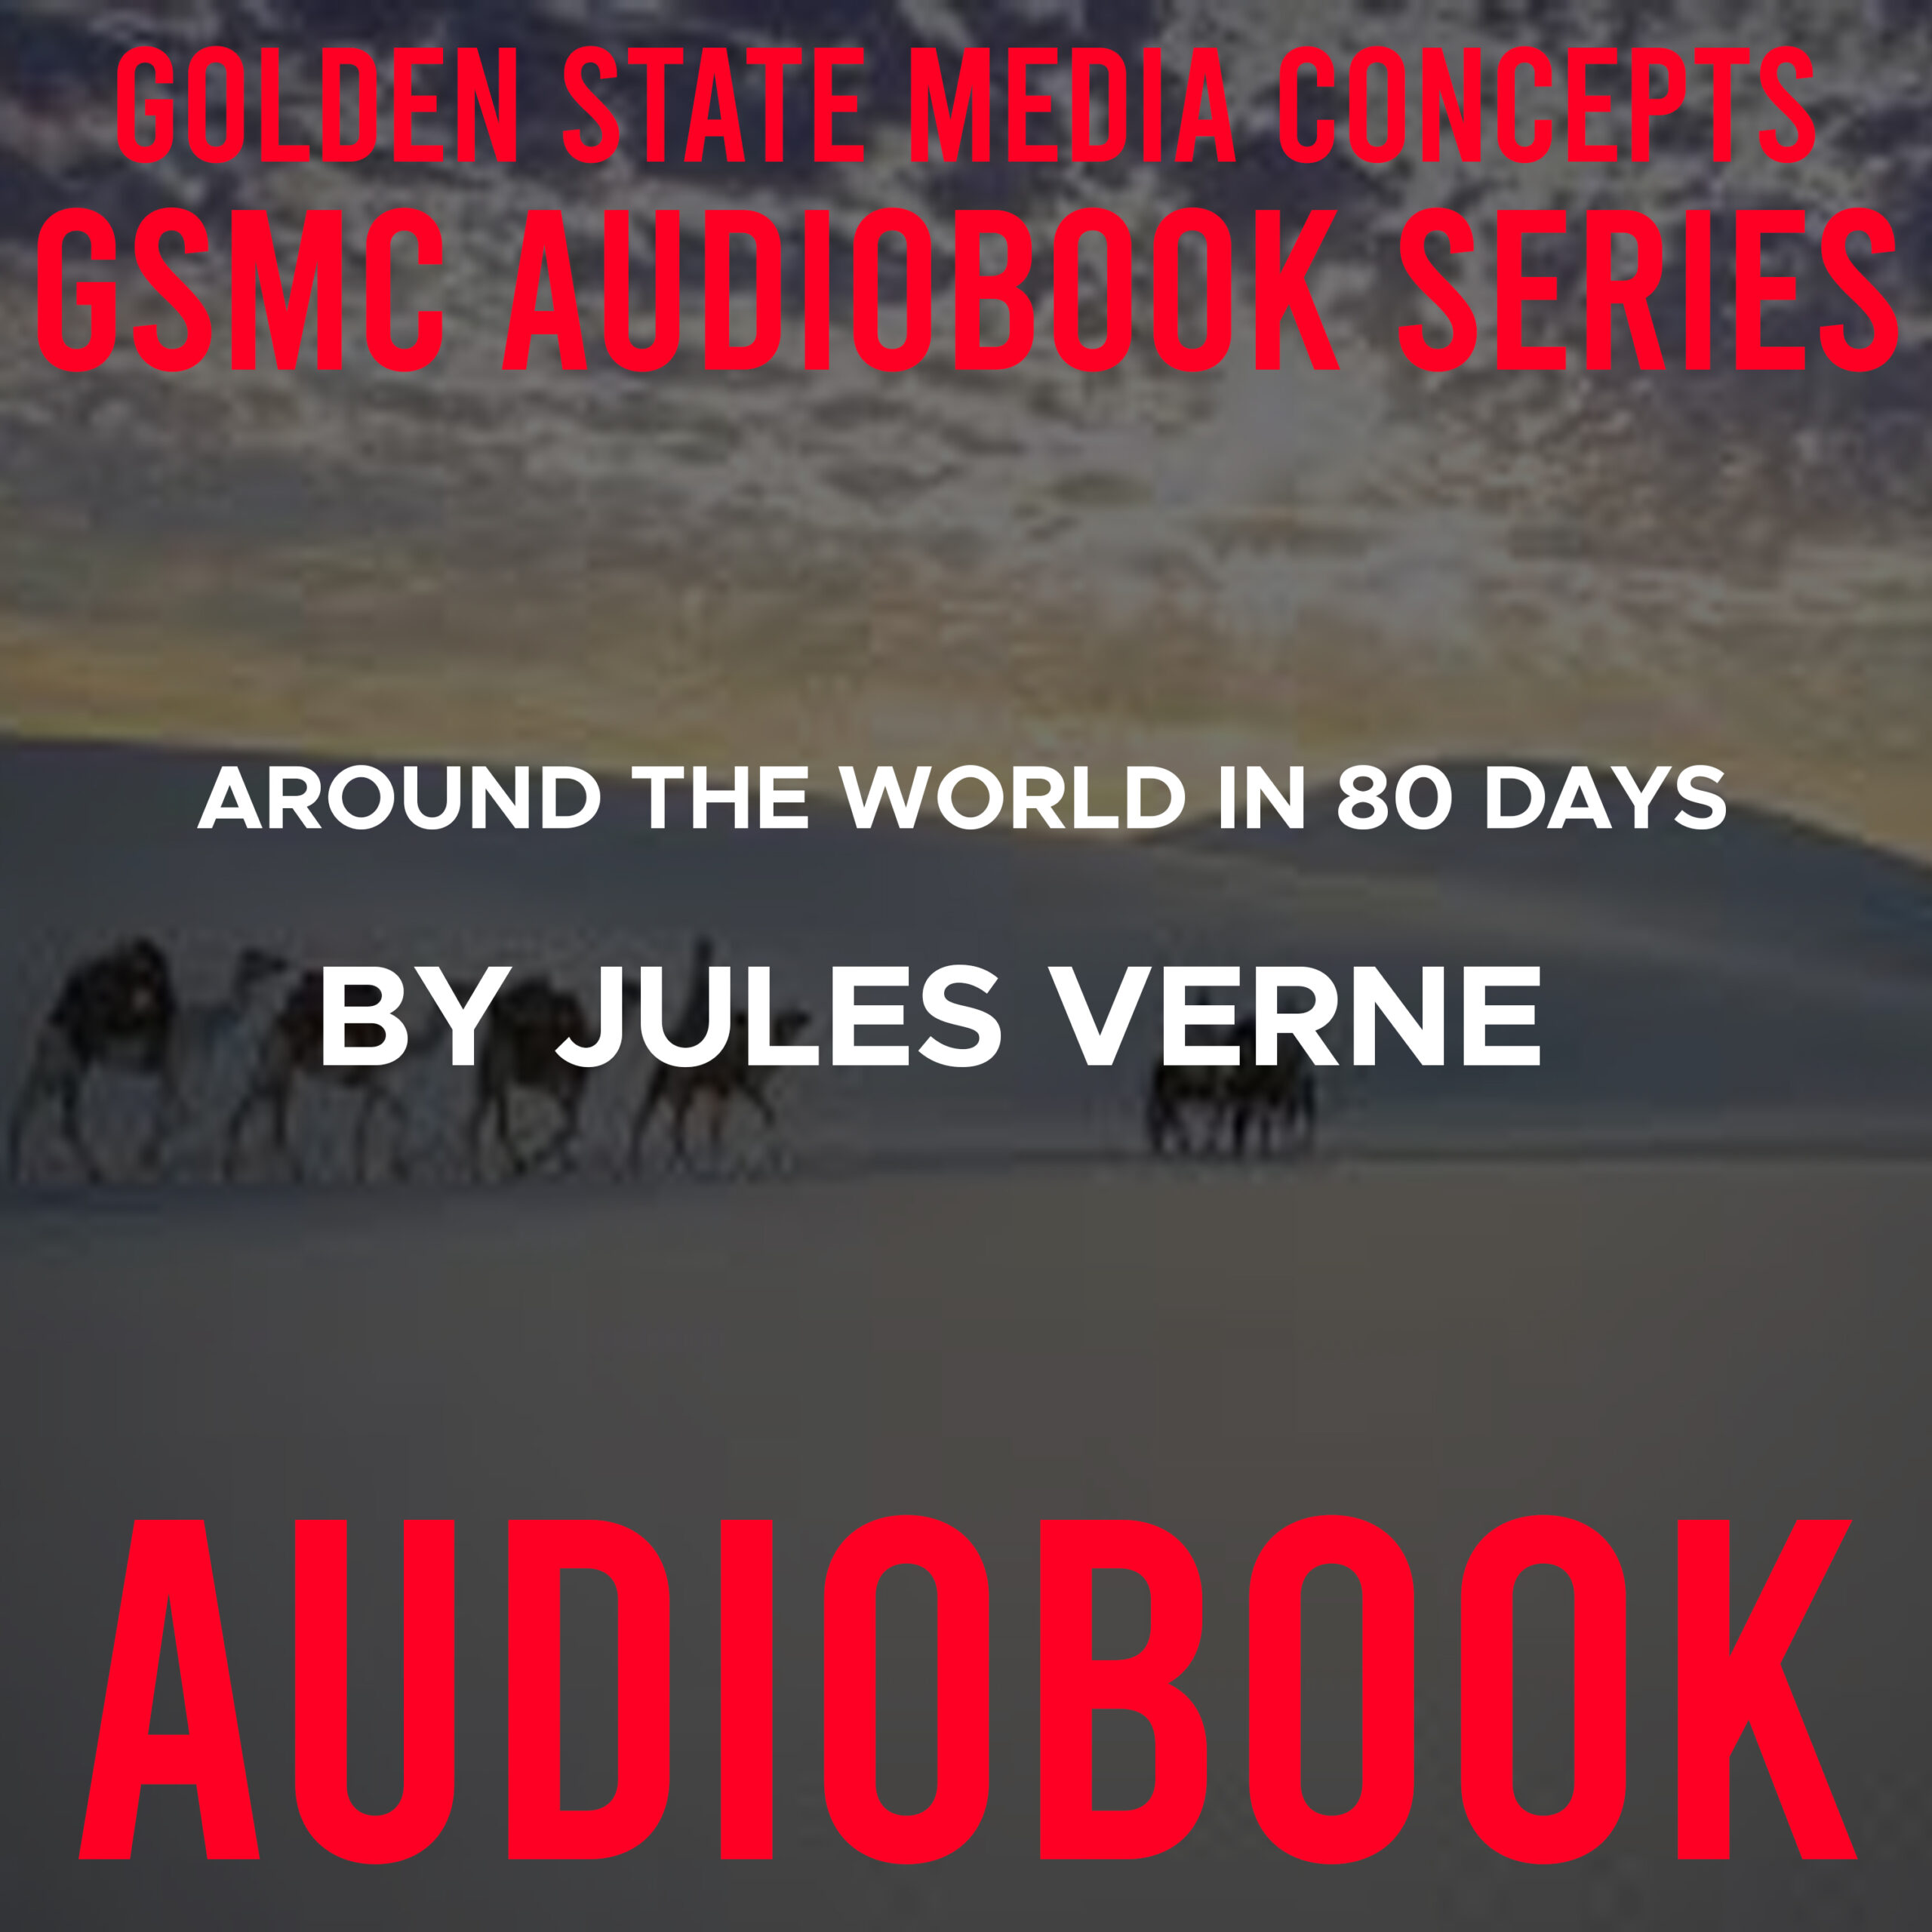 GSMC Audiobook Series: Around the World in 80 Days